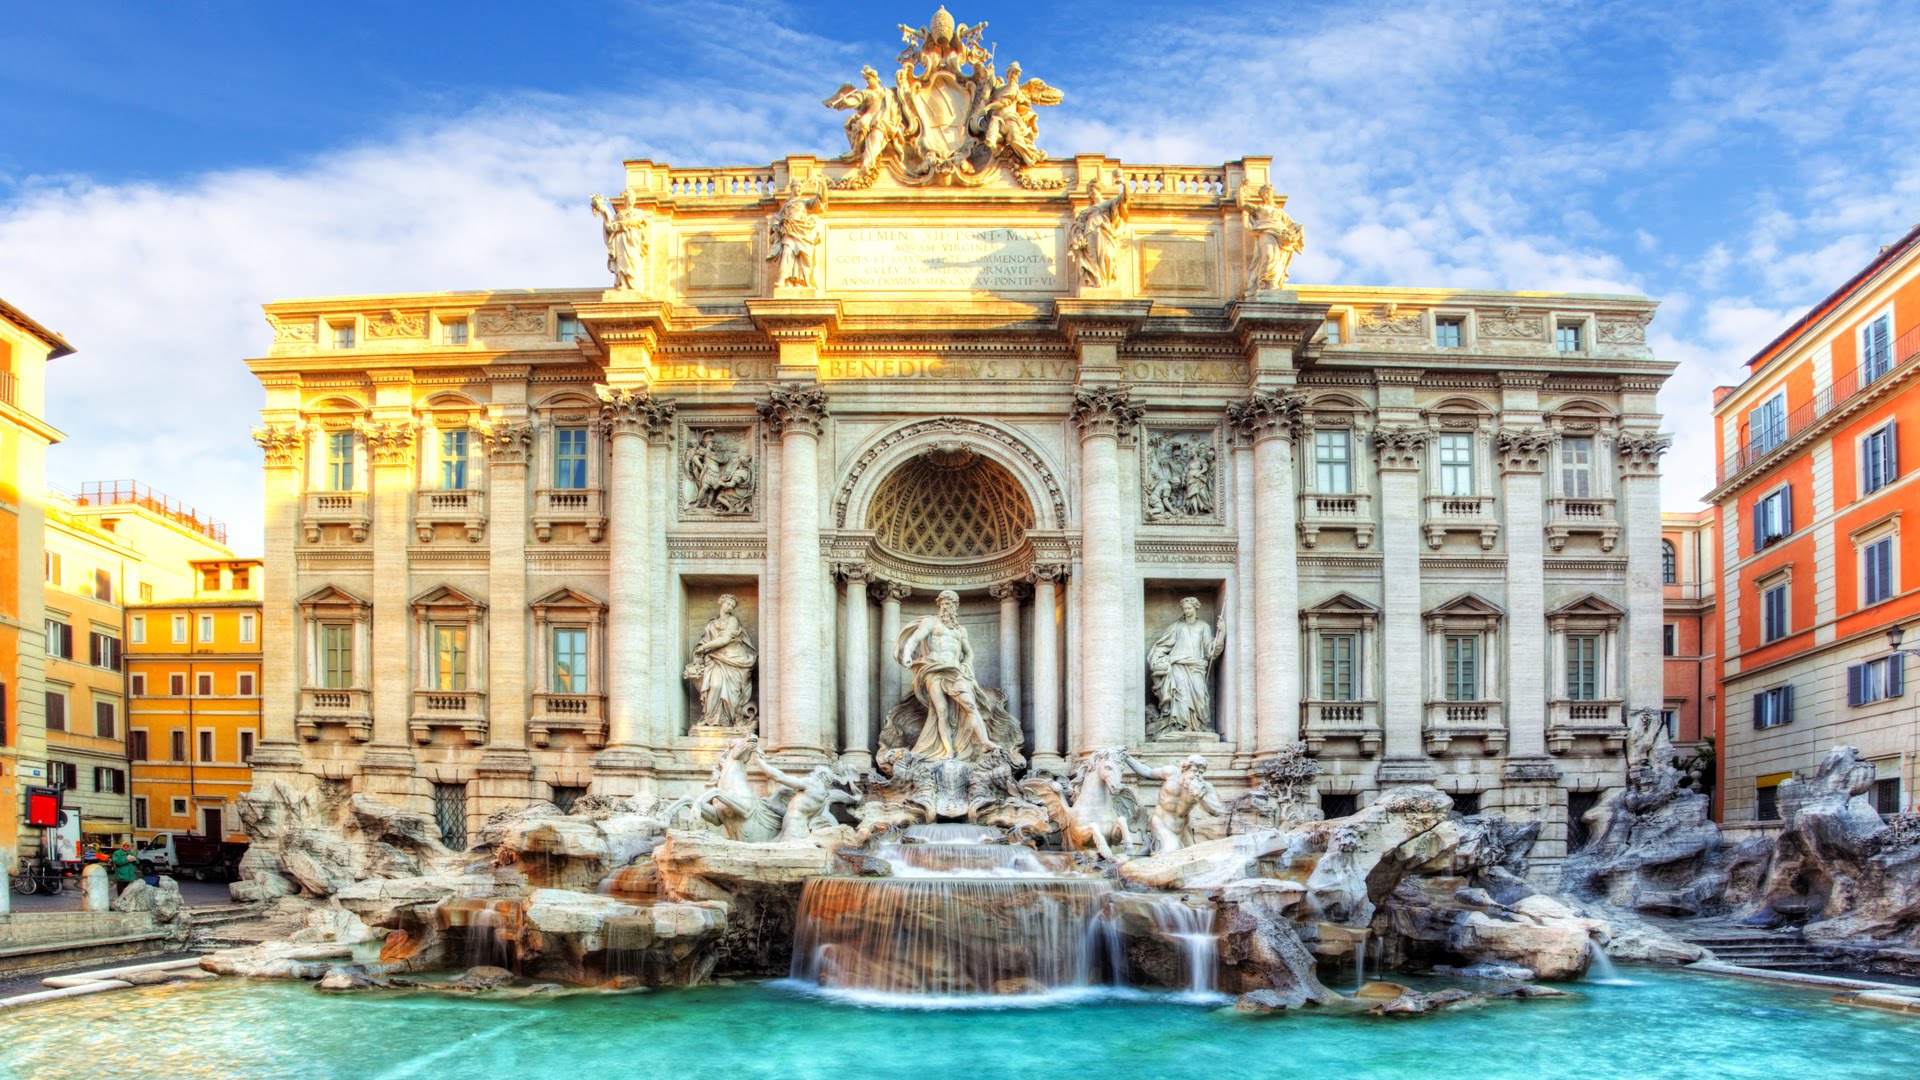 Rome - Trevi Fountain - YouTube